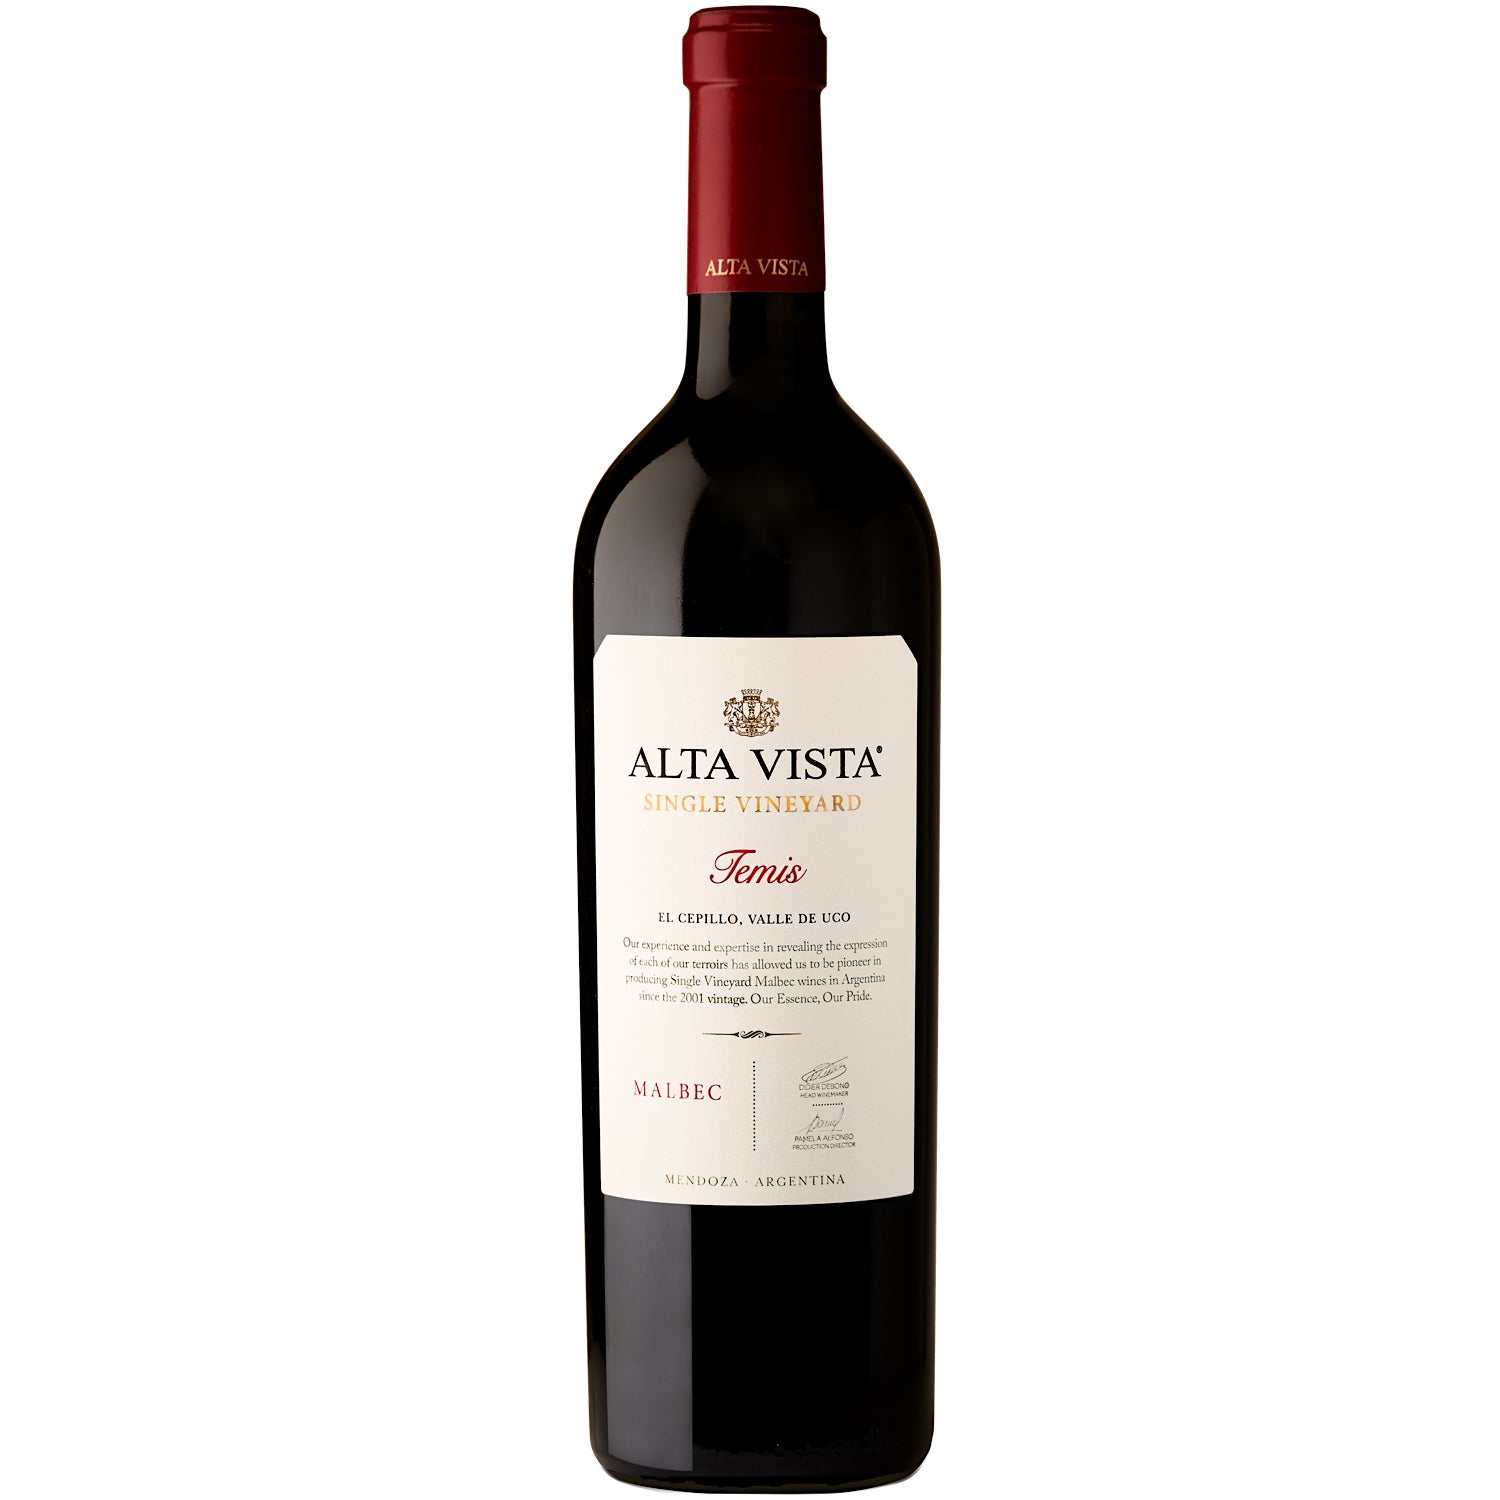 Alta Vista Single Vineyard Temis [750ml]